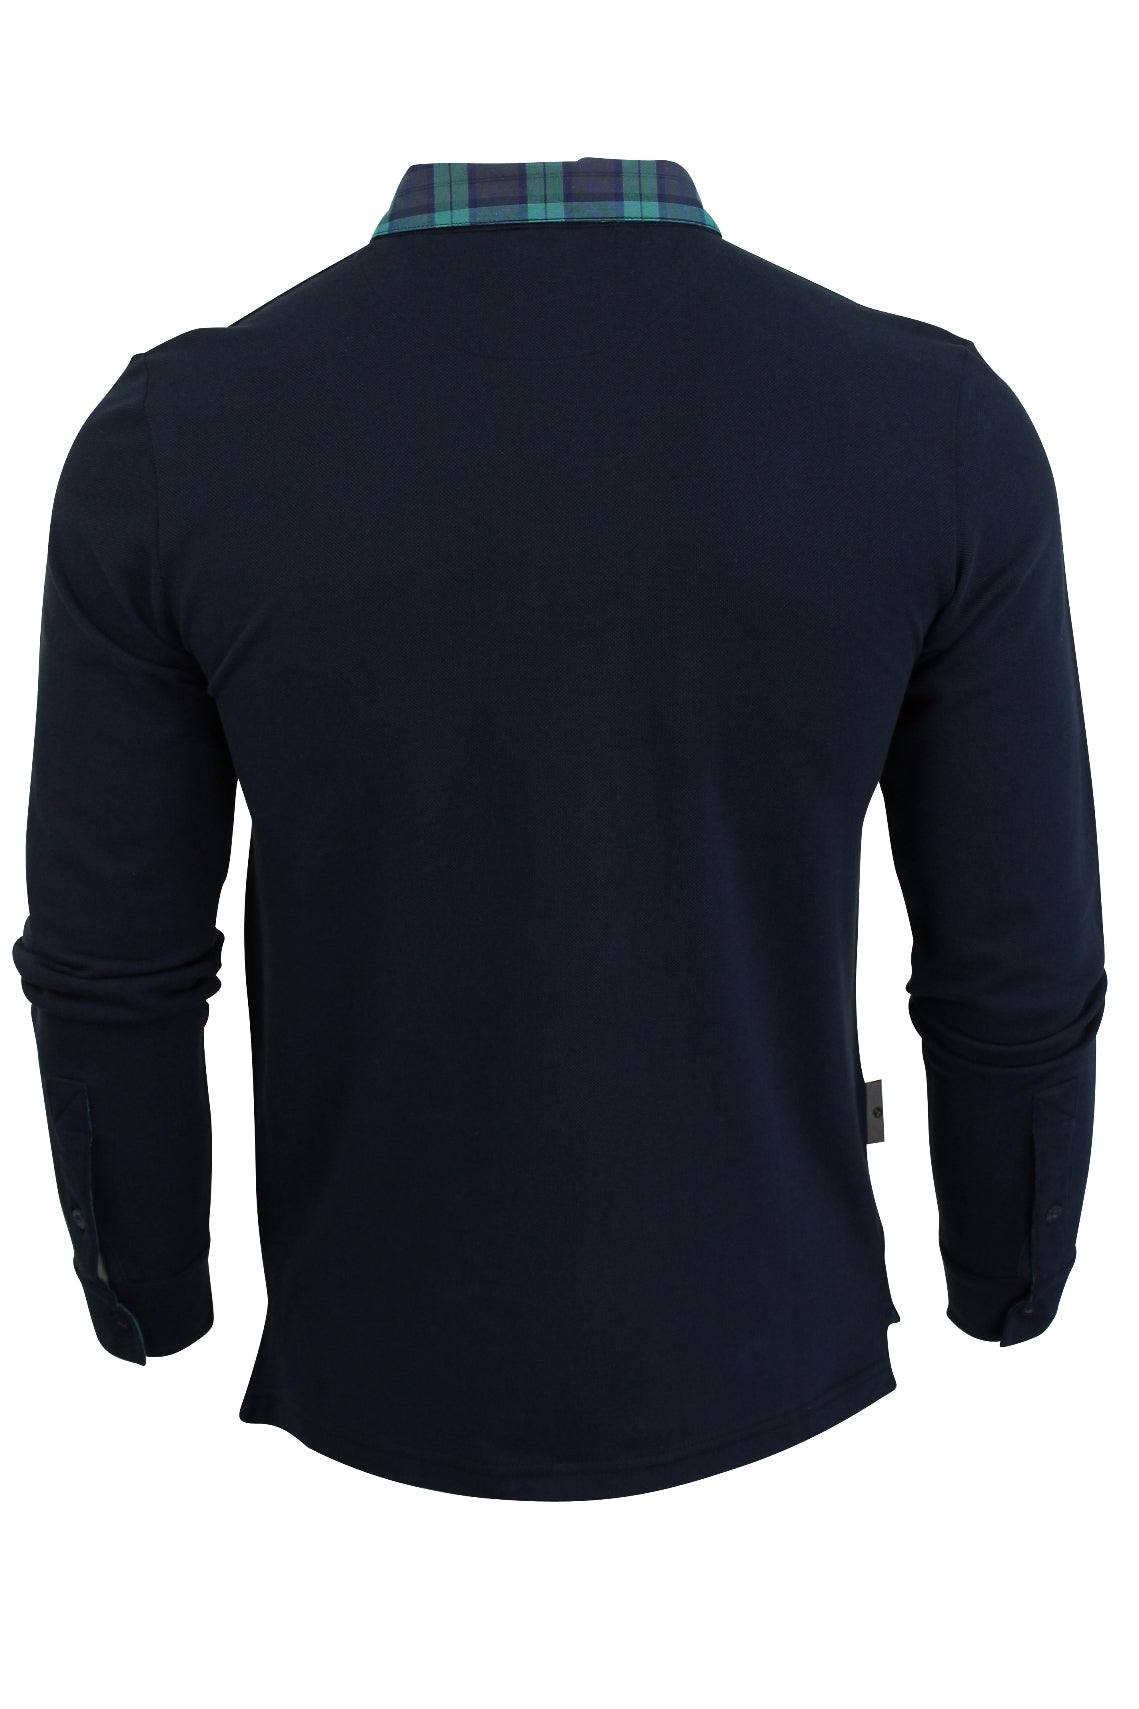 Voi Jeans Men's Polo T-Shirt, Long Sleeved, 03, Rory-Polo, Black Iris